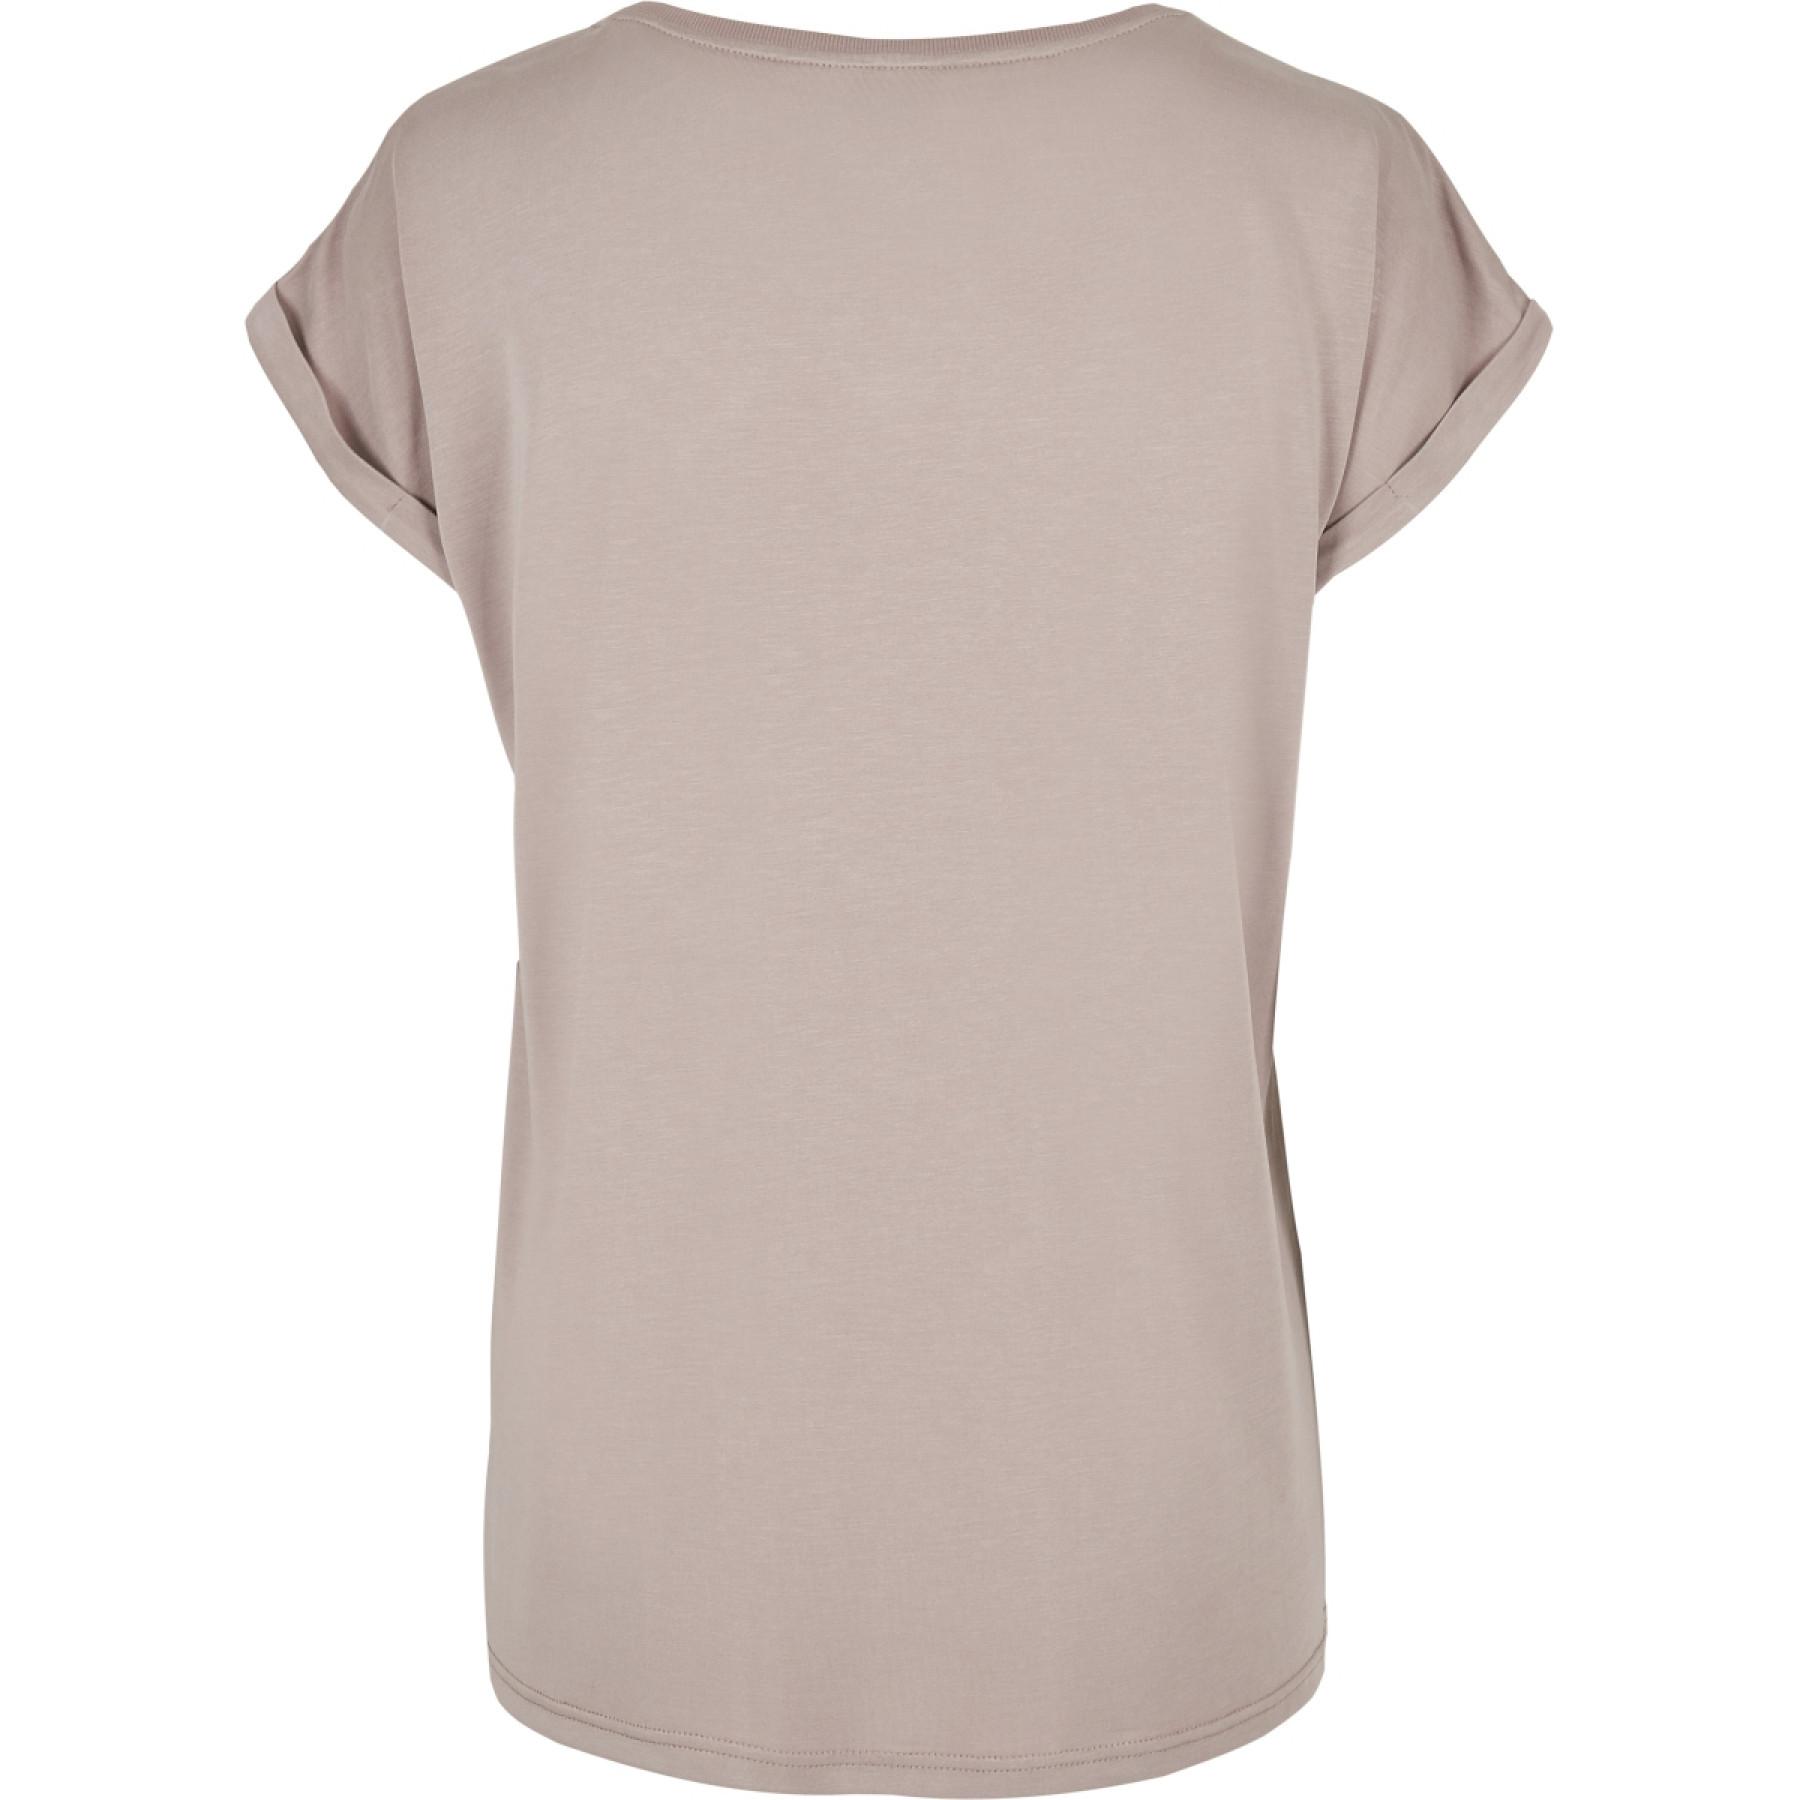 Damen-T-Shirt Urban Classics modal extended shoulder-grandes tailles